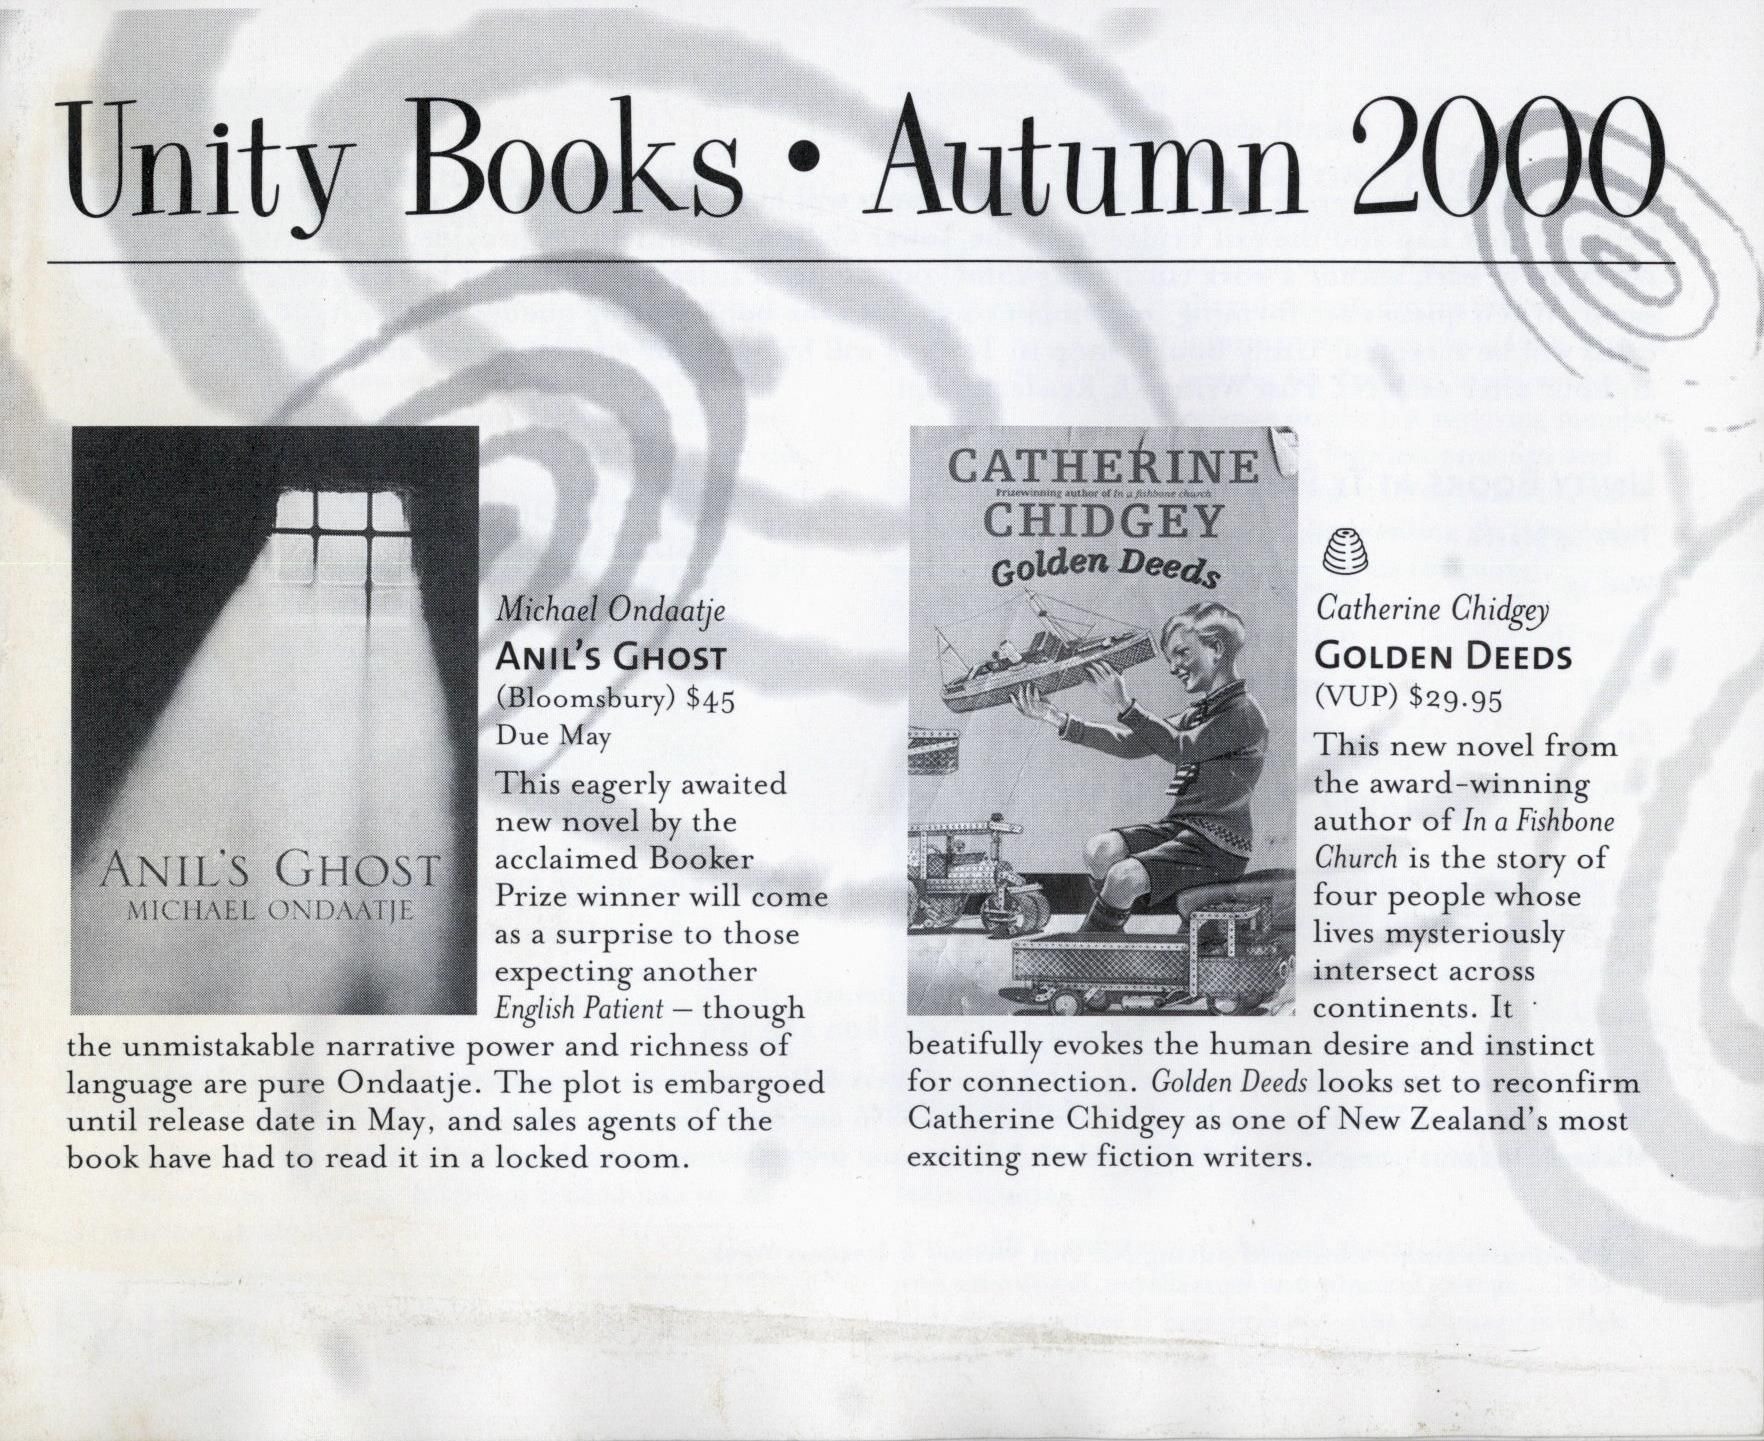 Catalogue, Autumn 2000